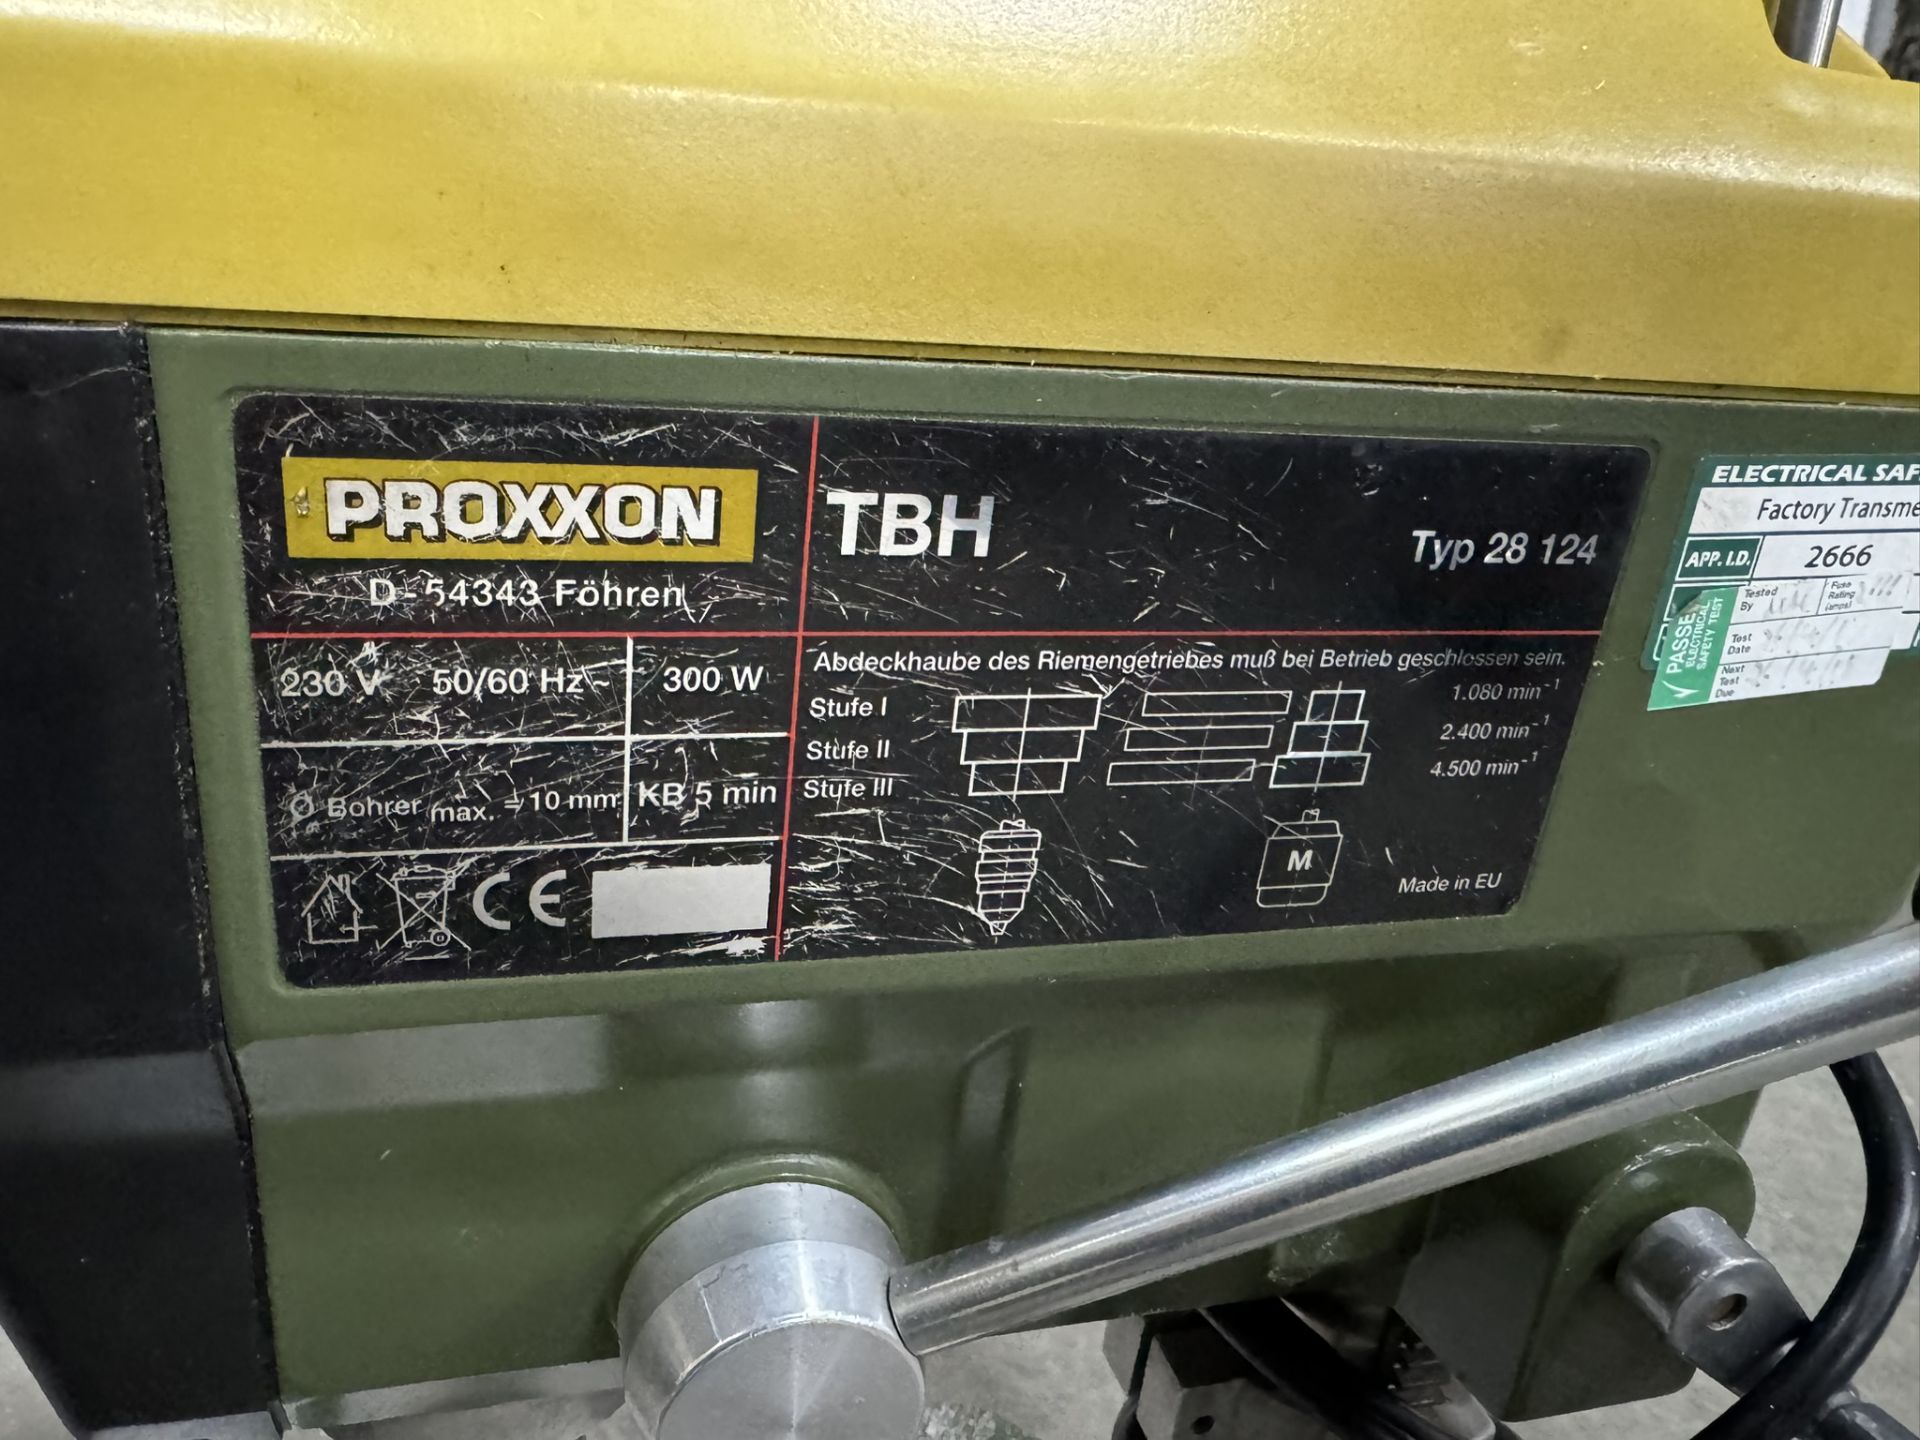 Proxxon 28124 TBH Bench Drill - Image 12 of 12